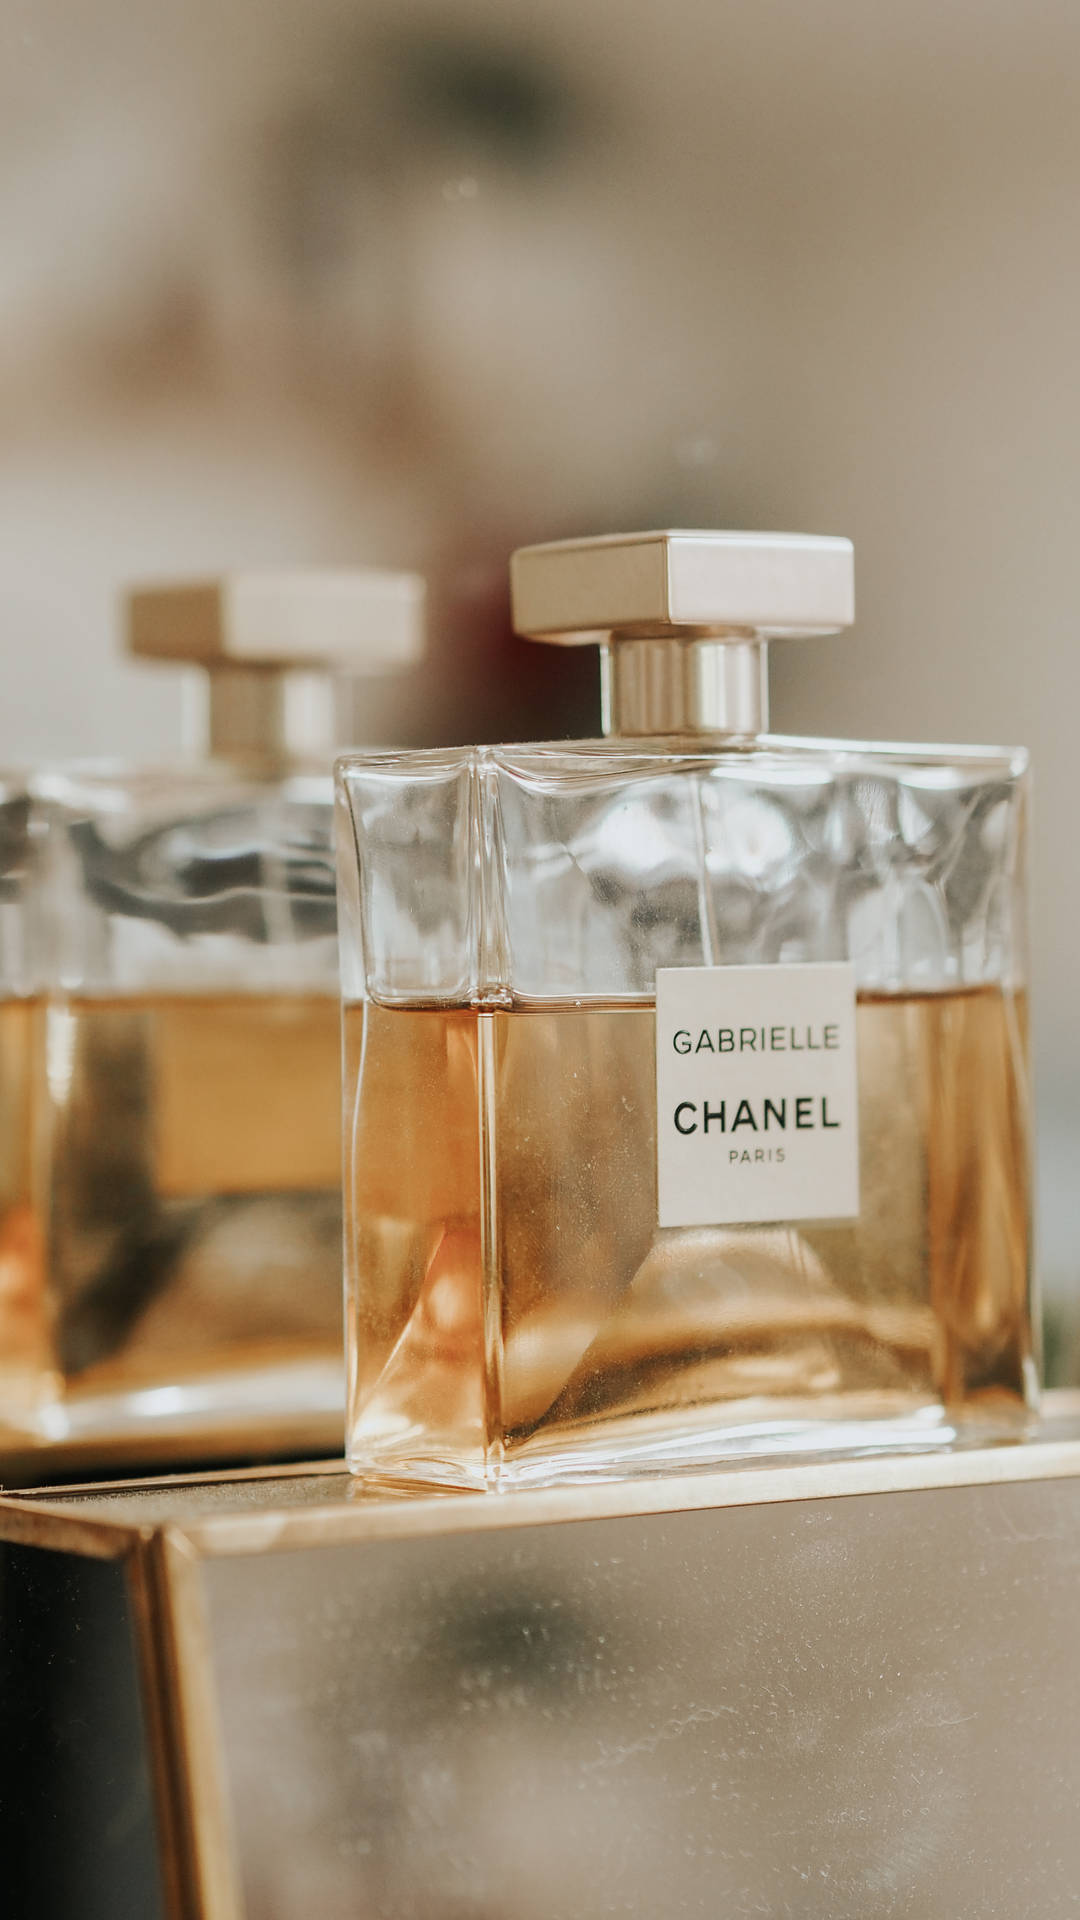 Gabrielle Chanel Perfume Mirror Reflection Wallpaper